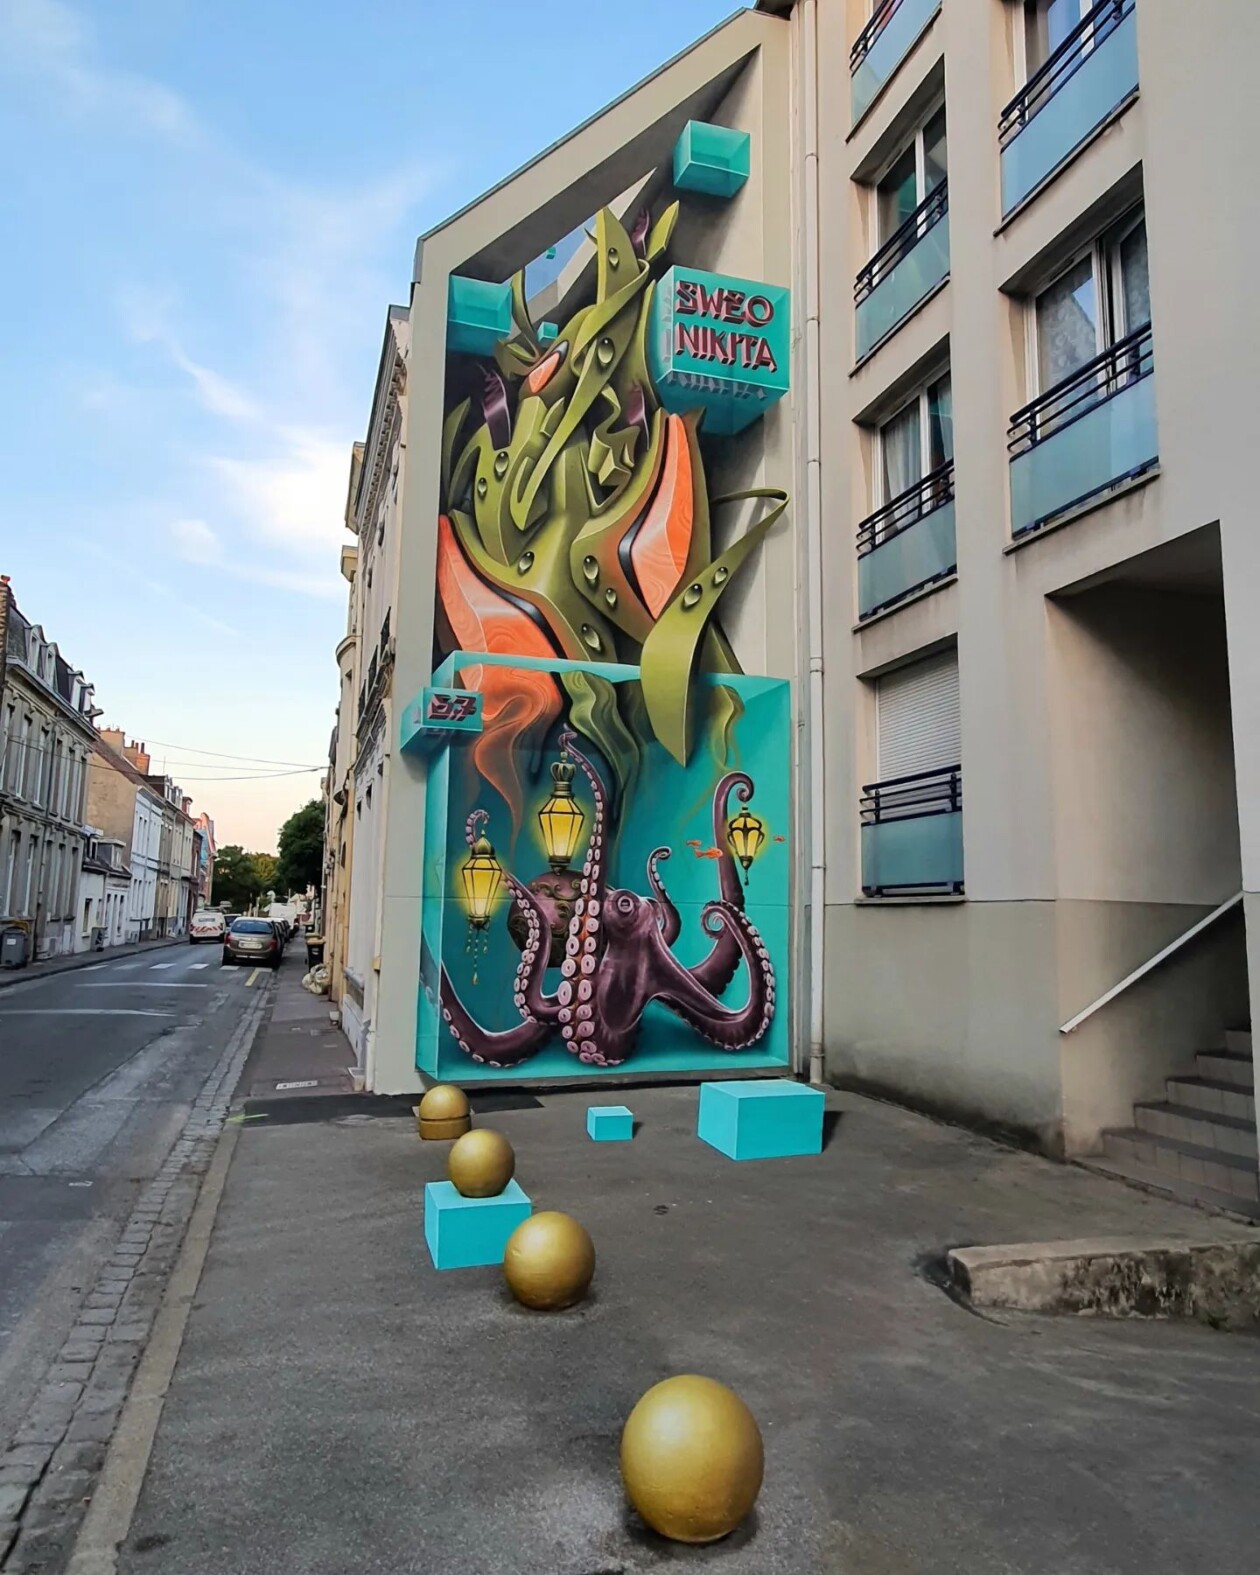 Impressive Graffiti With Optical Illusion By Sebastien Sweo And Nikita (1)